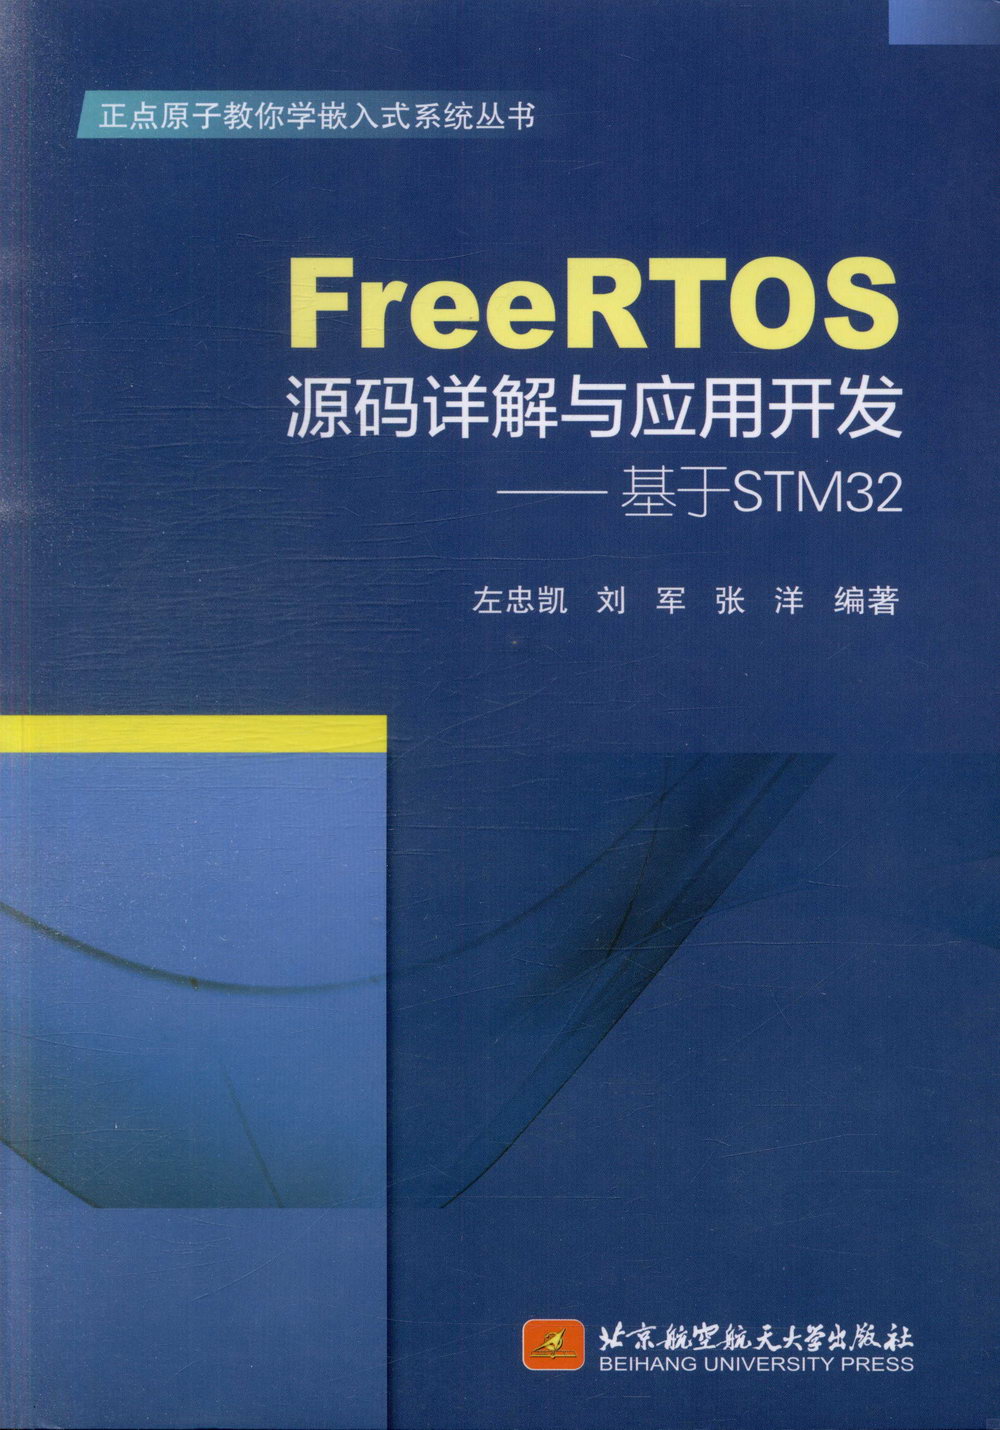 FreeRTOS源碼詳解與應用開發--基於STM32